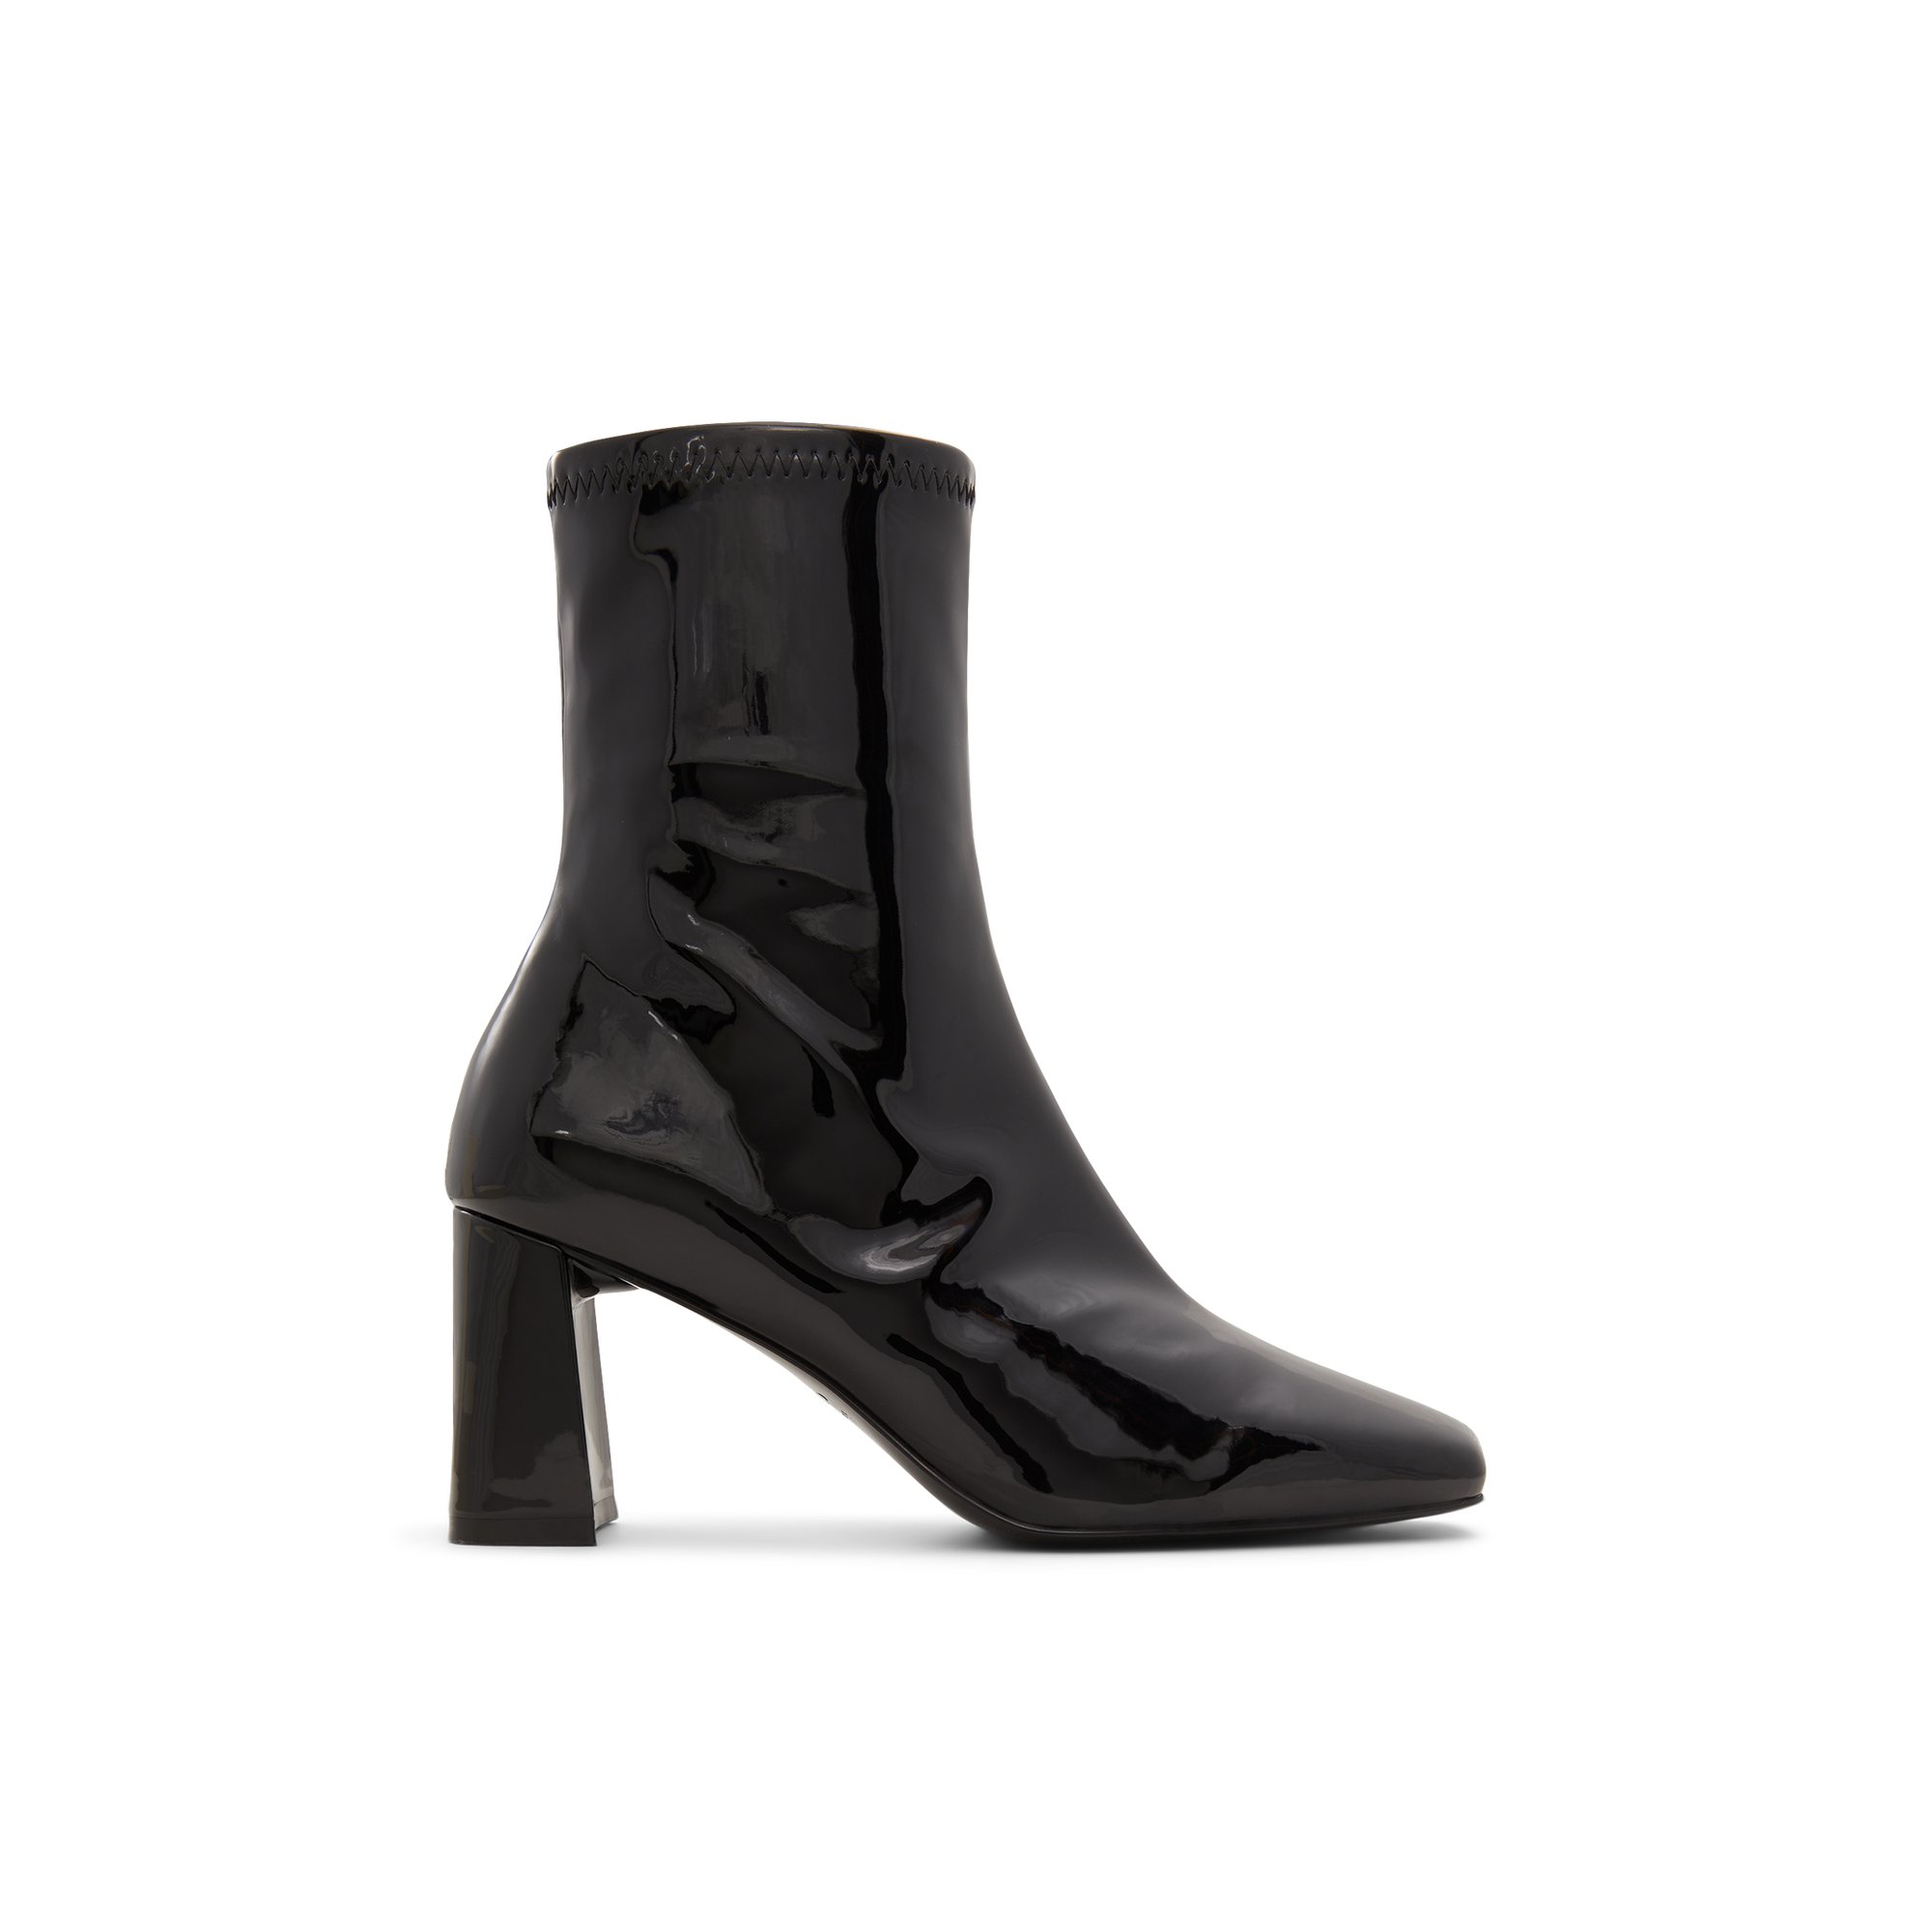 ALDO Marcella - Women's Boots Dress - Black